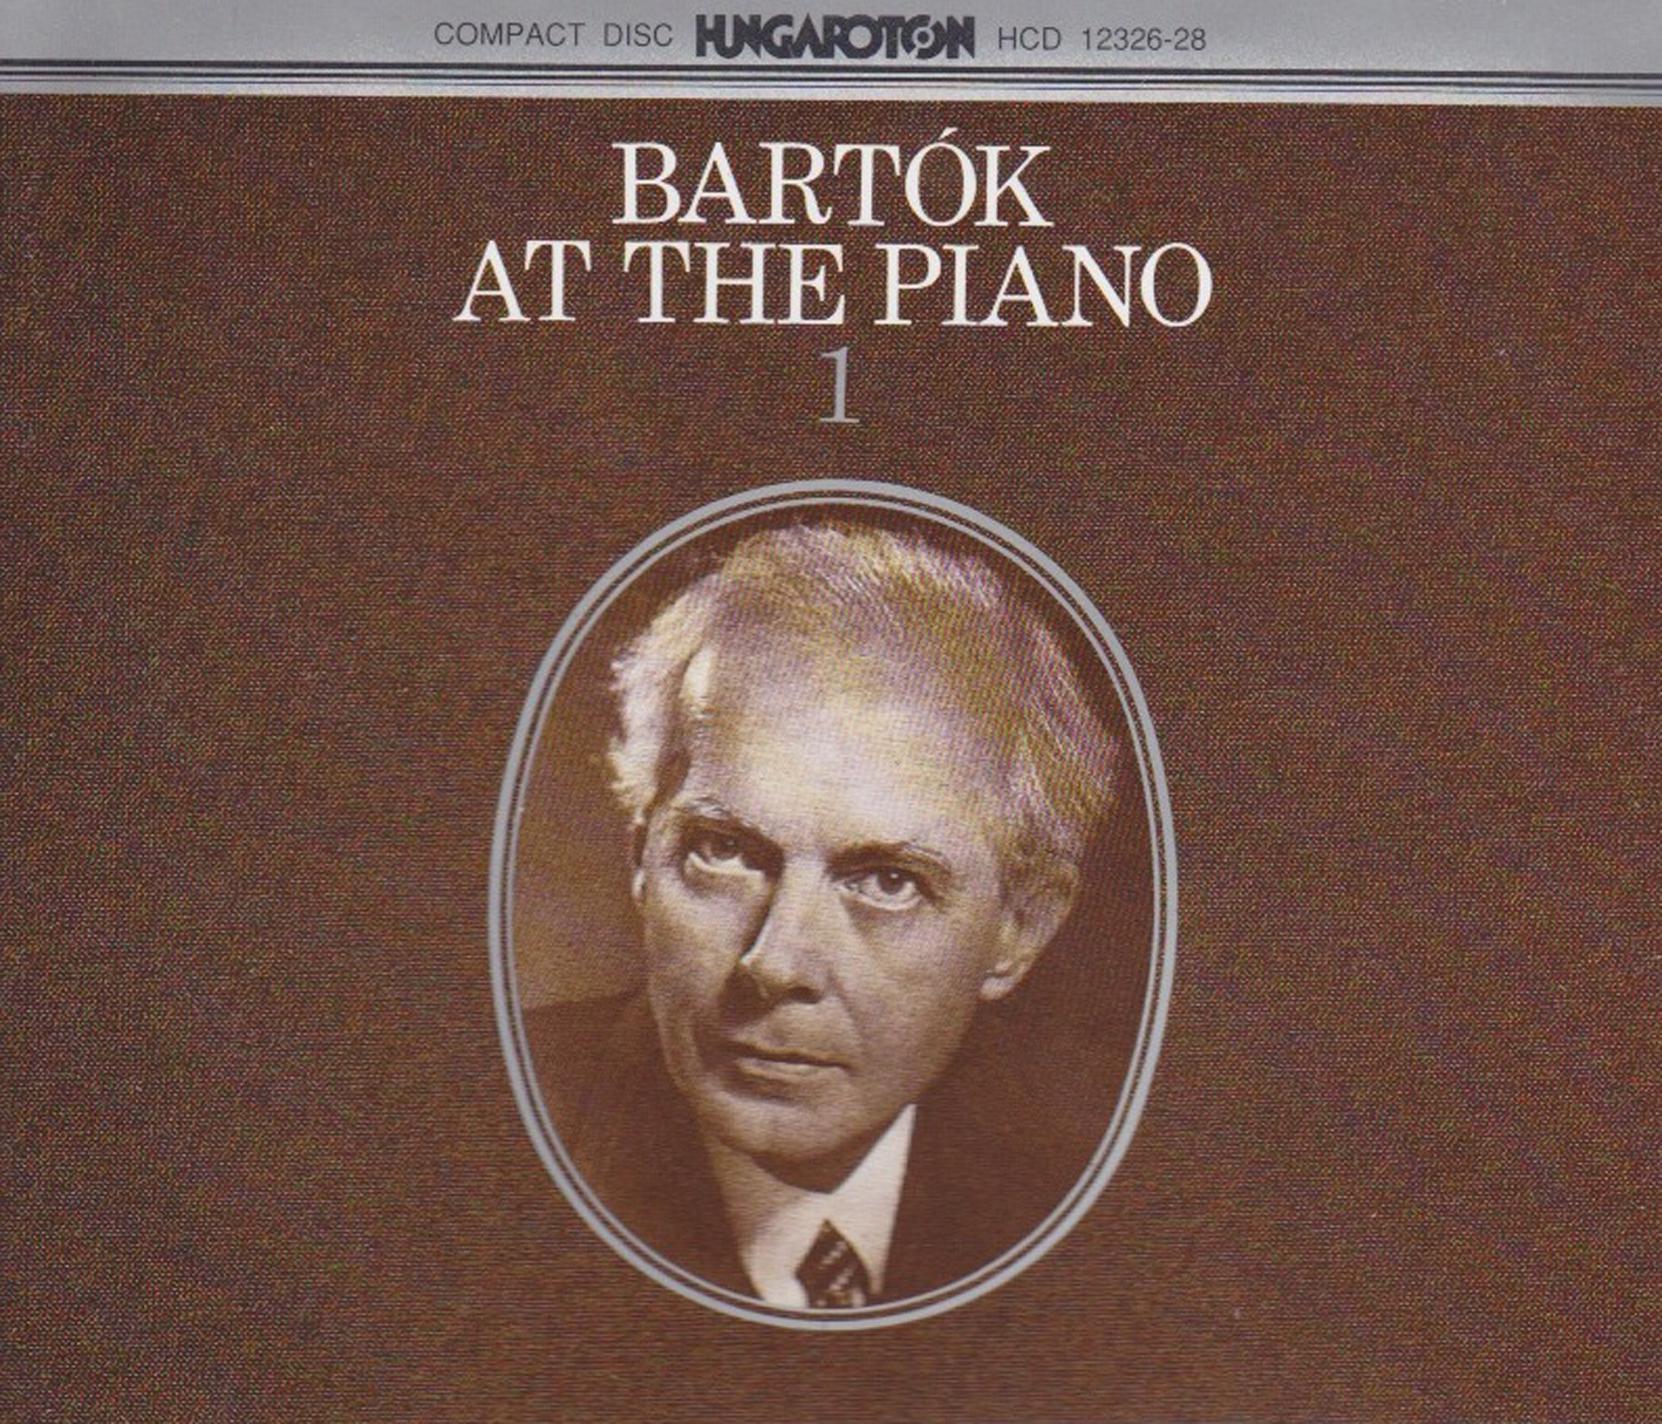 Béla Bartók - 9 Little Piano Pieces, BB 90, No. 6. Dal - No. 8. Csorgotanc - Petite Suite, BB 113, No. 5. Szol …:9 Little Piano Pieces, BB 90: No. 6, Dal - No. 8, Csorgotanc - Petite Suite, BB 113: No. 5, Szol …